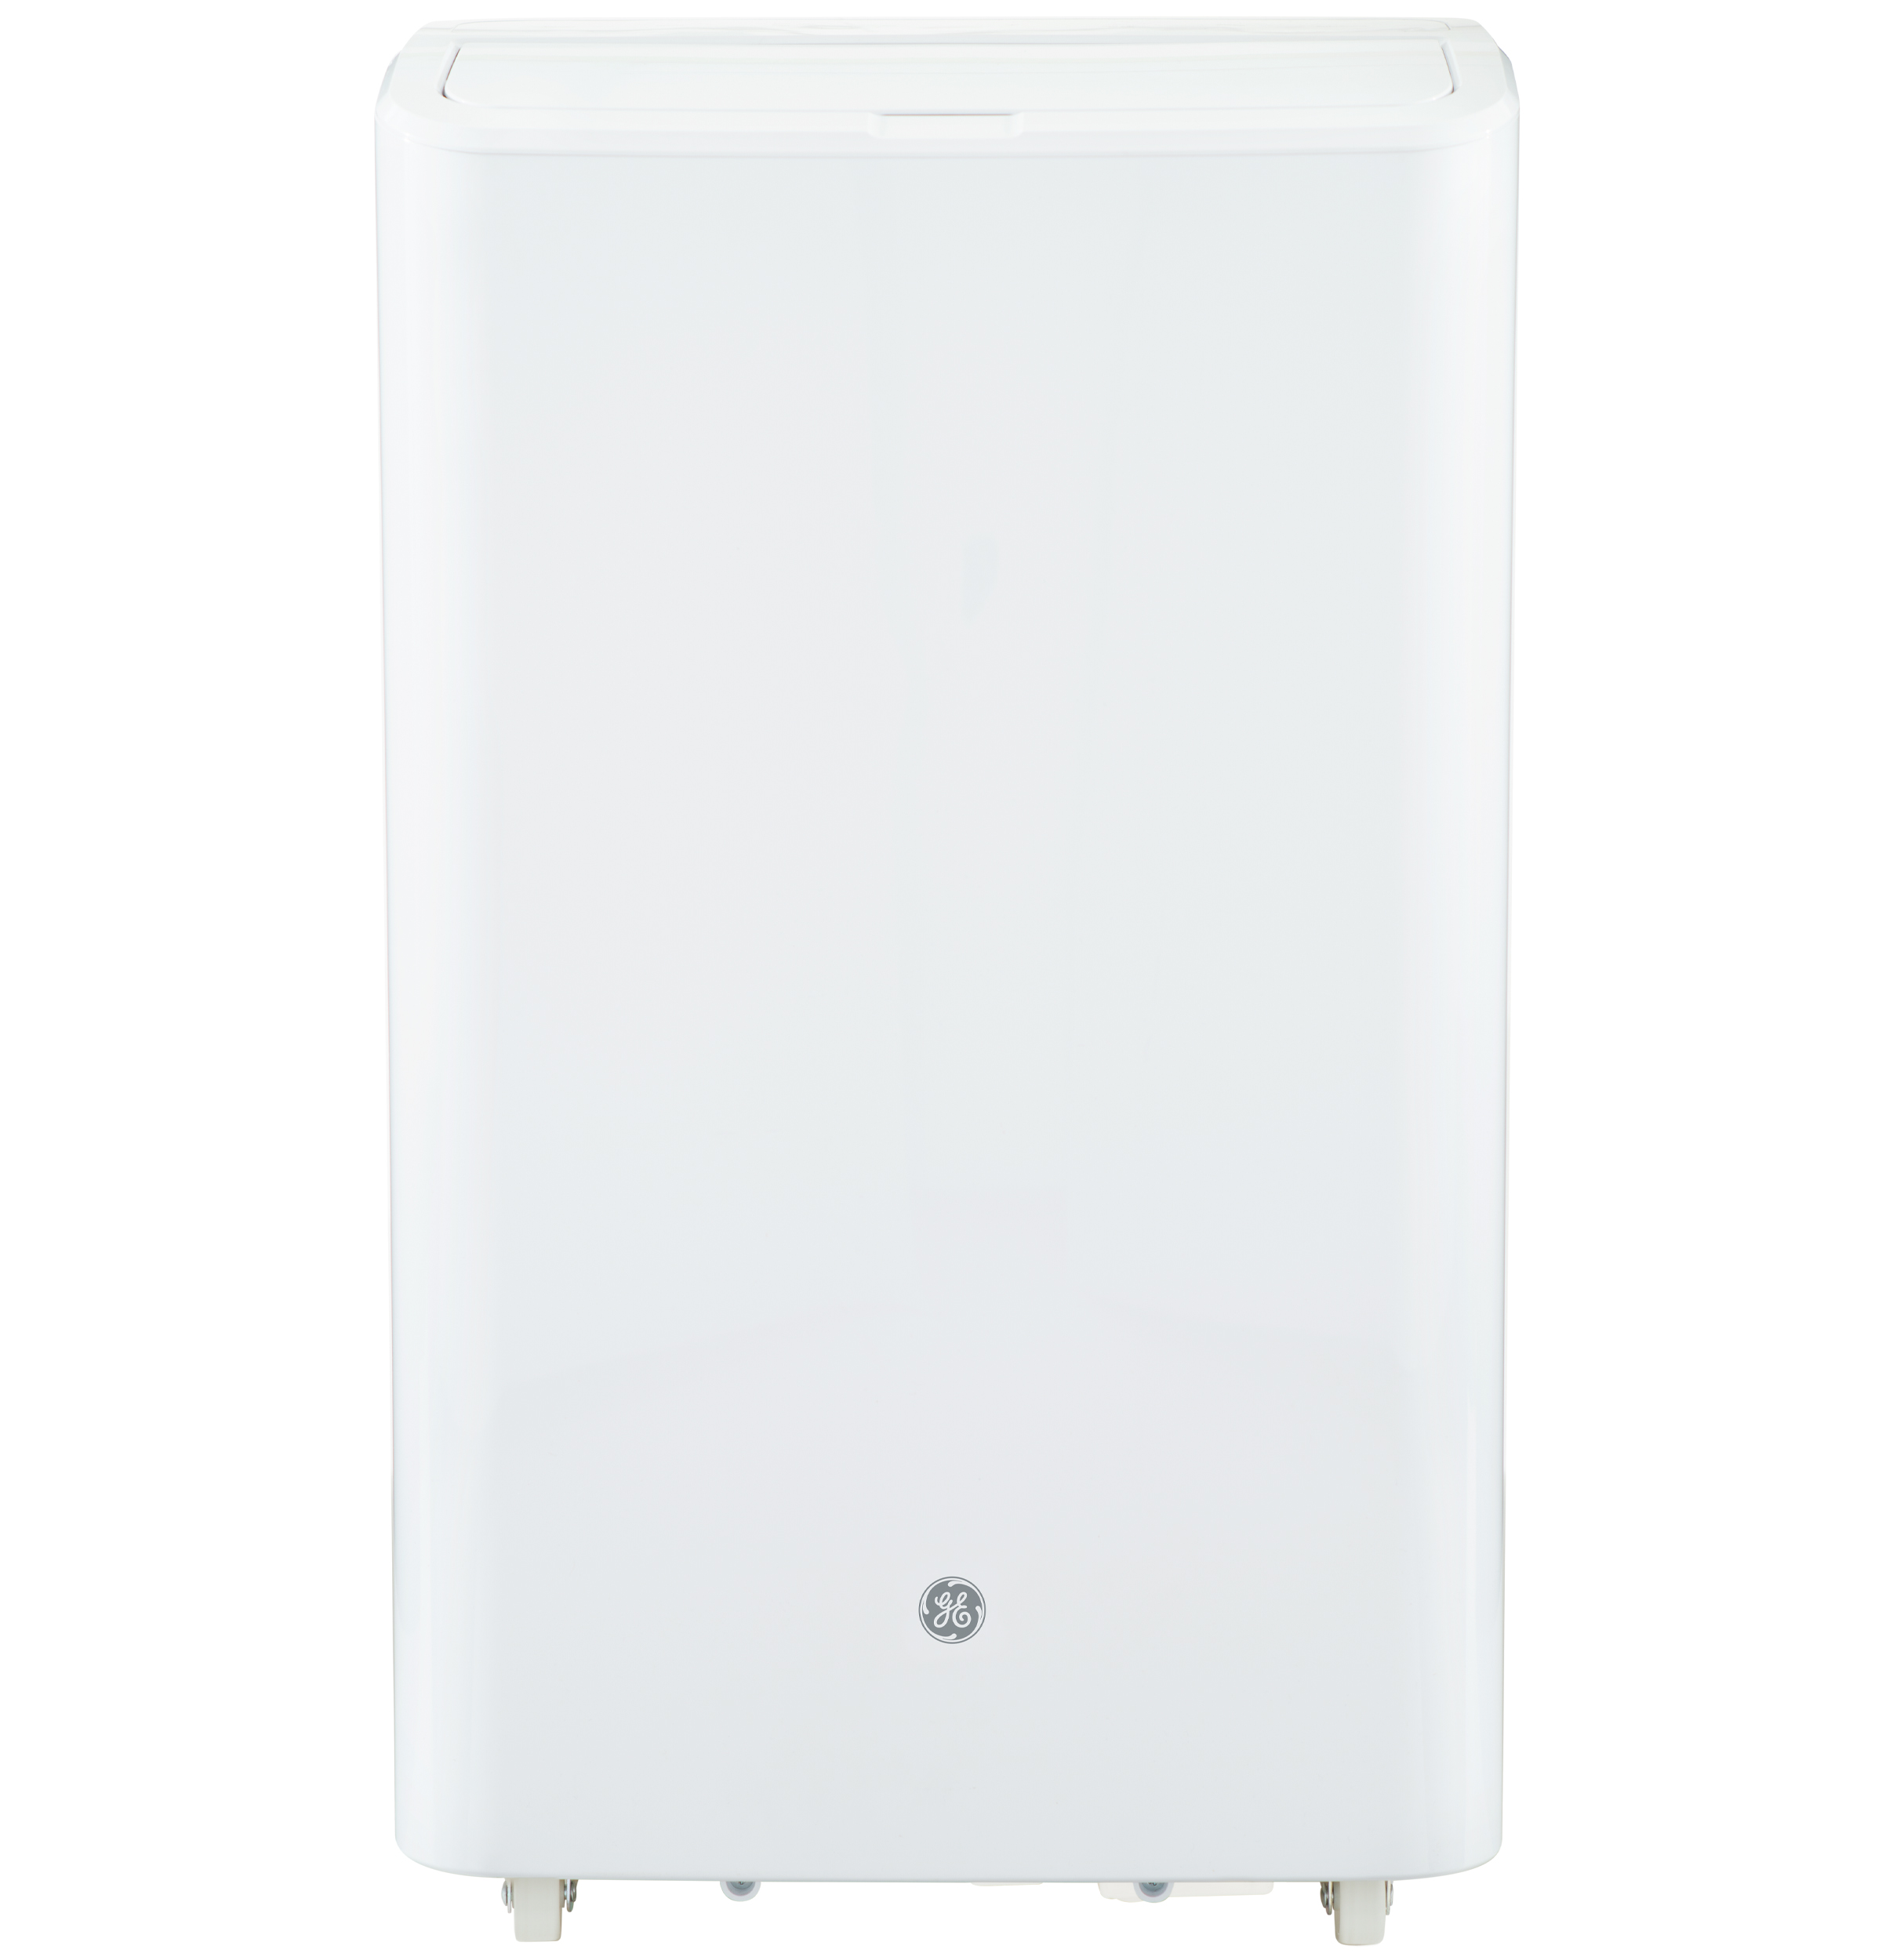 GE® 10,000 BTU Portable Air Conditioner for Medium Rooms up to 350 sq ft. (7,200 BTU SACC)